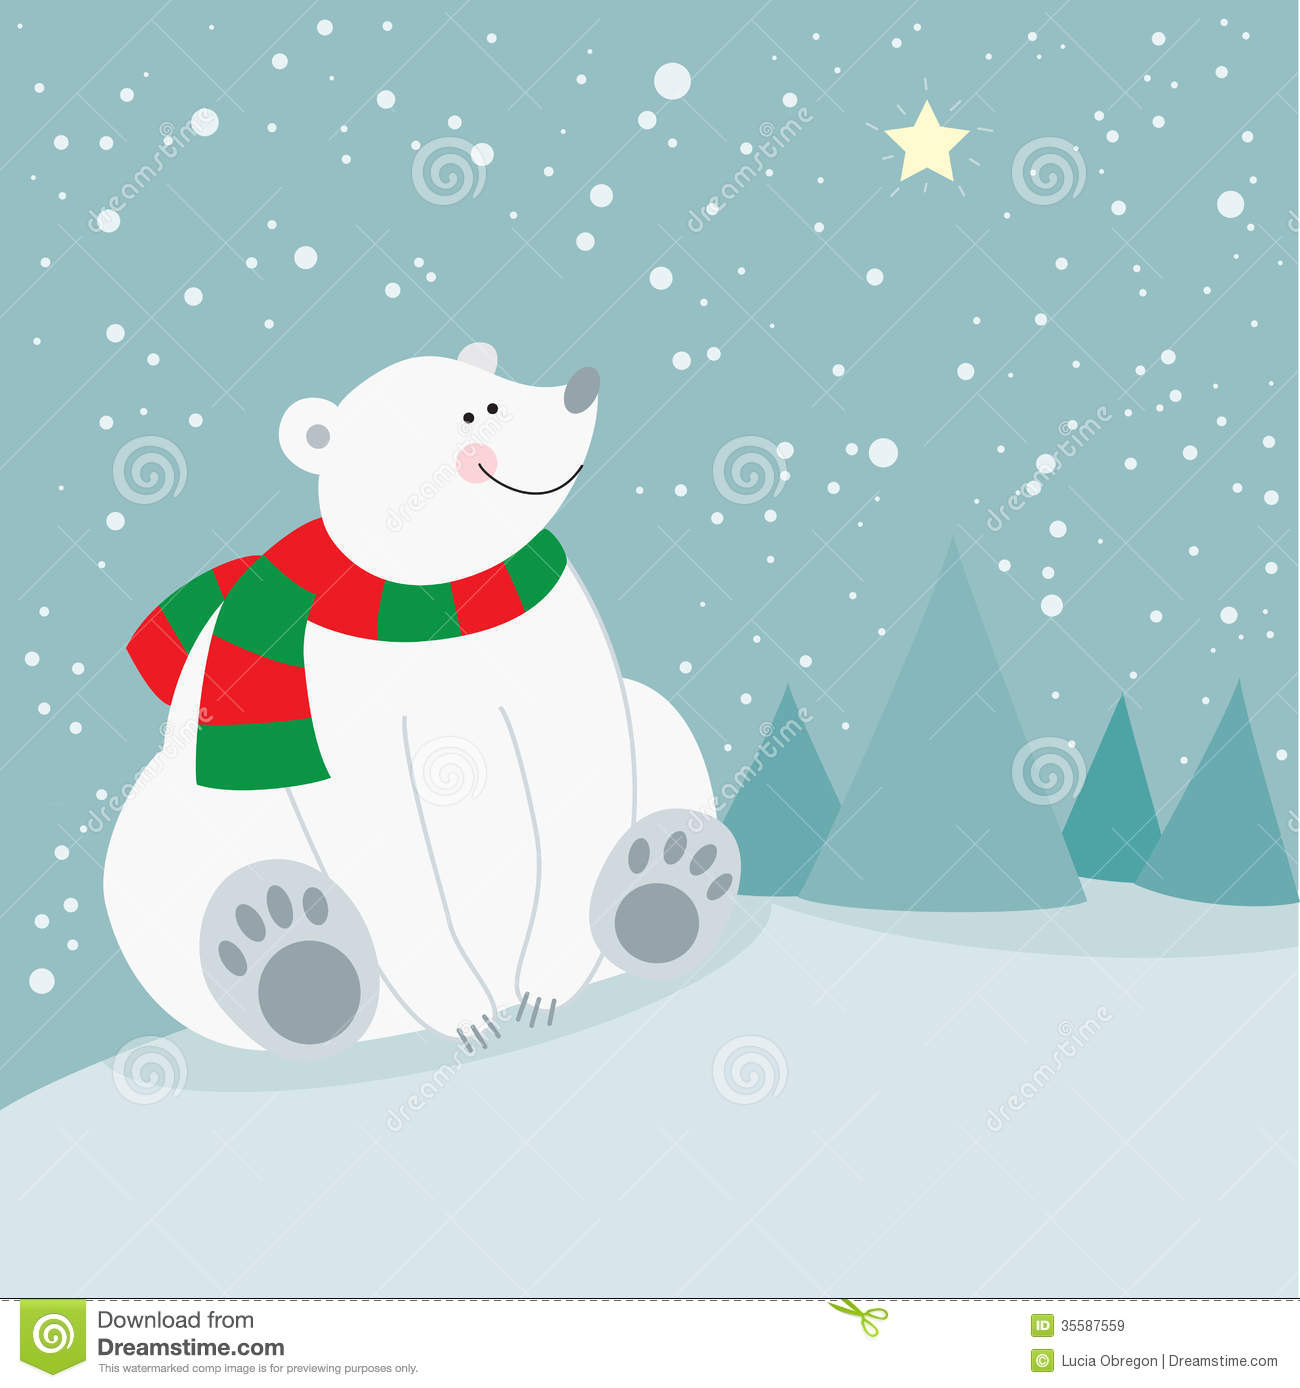 Cute Christmas Holiday Polar Bear Royalty Free Stock Images   Image